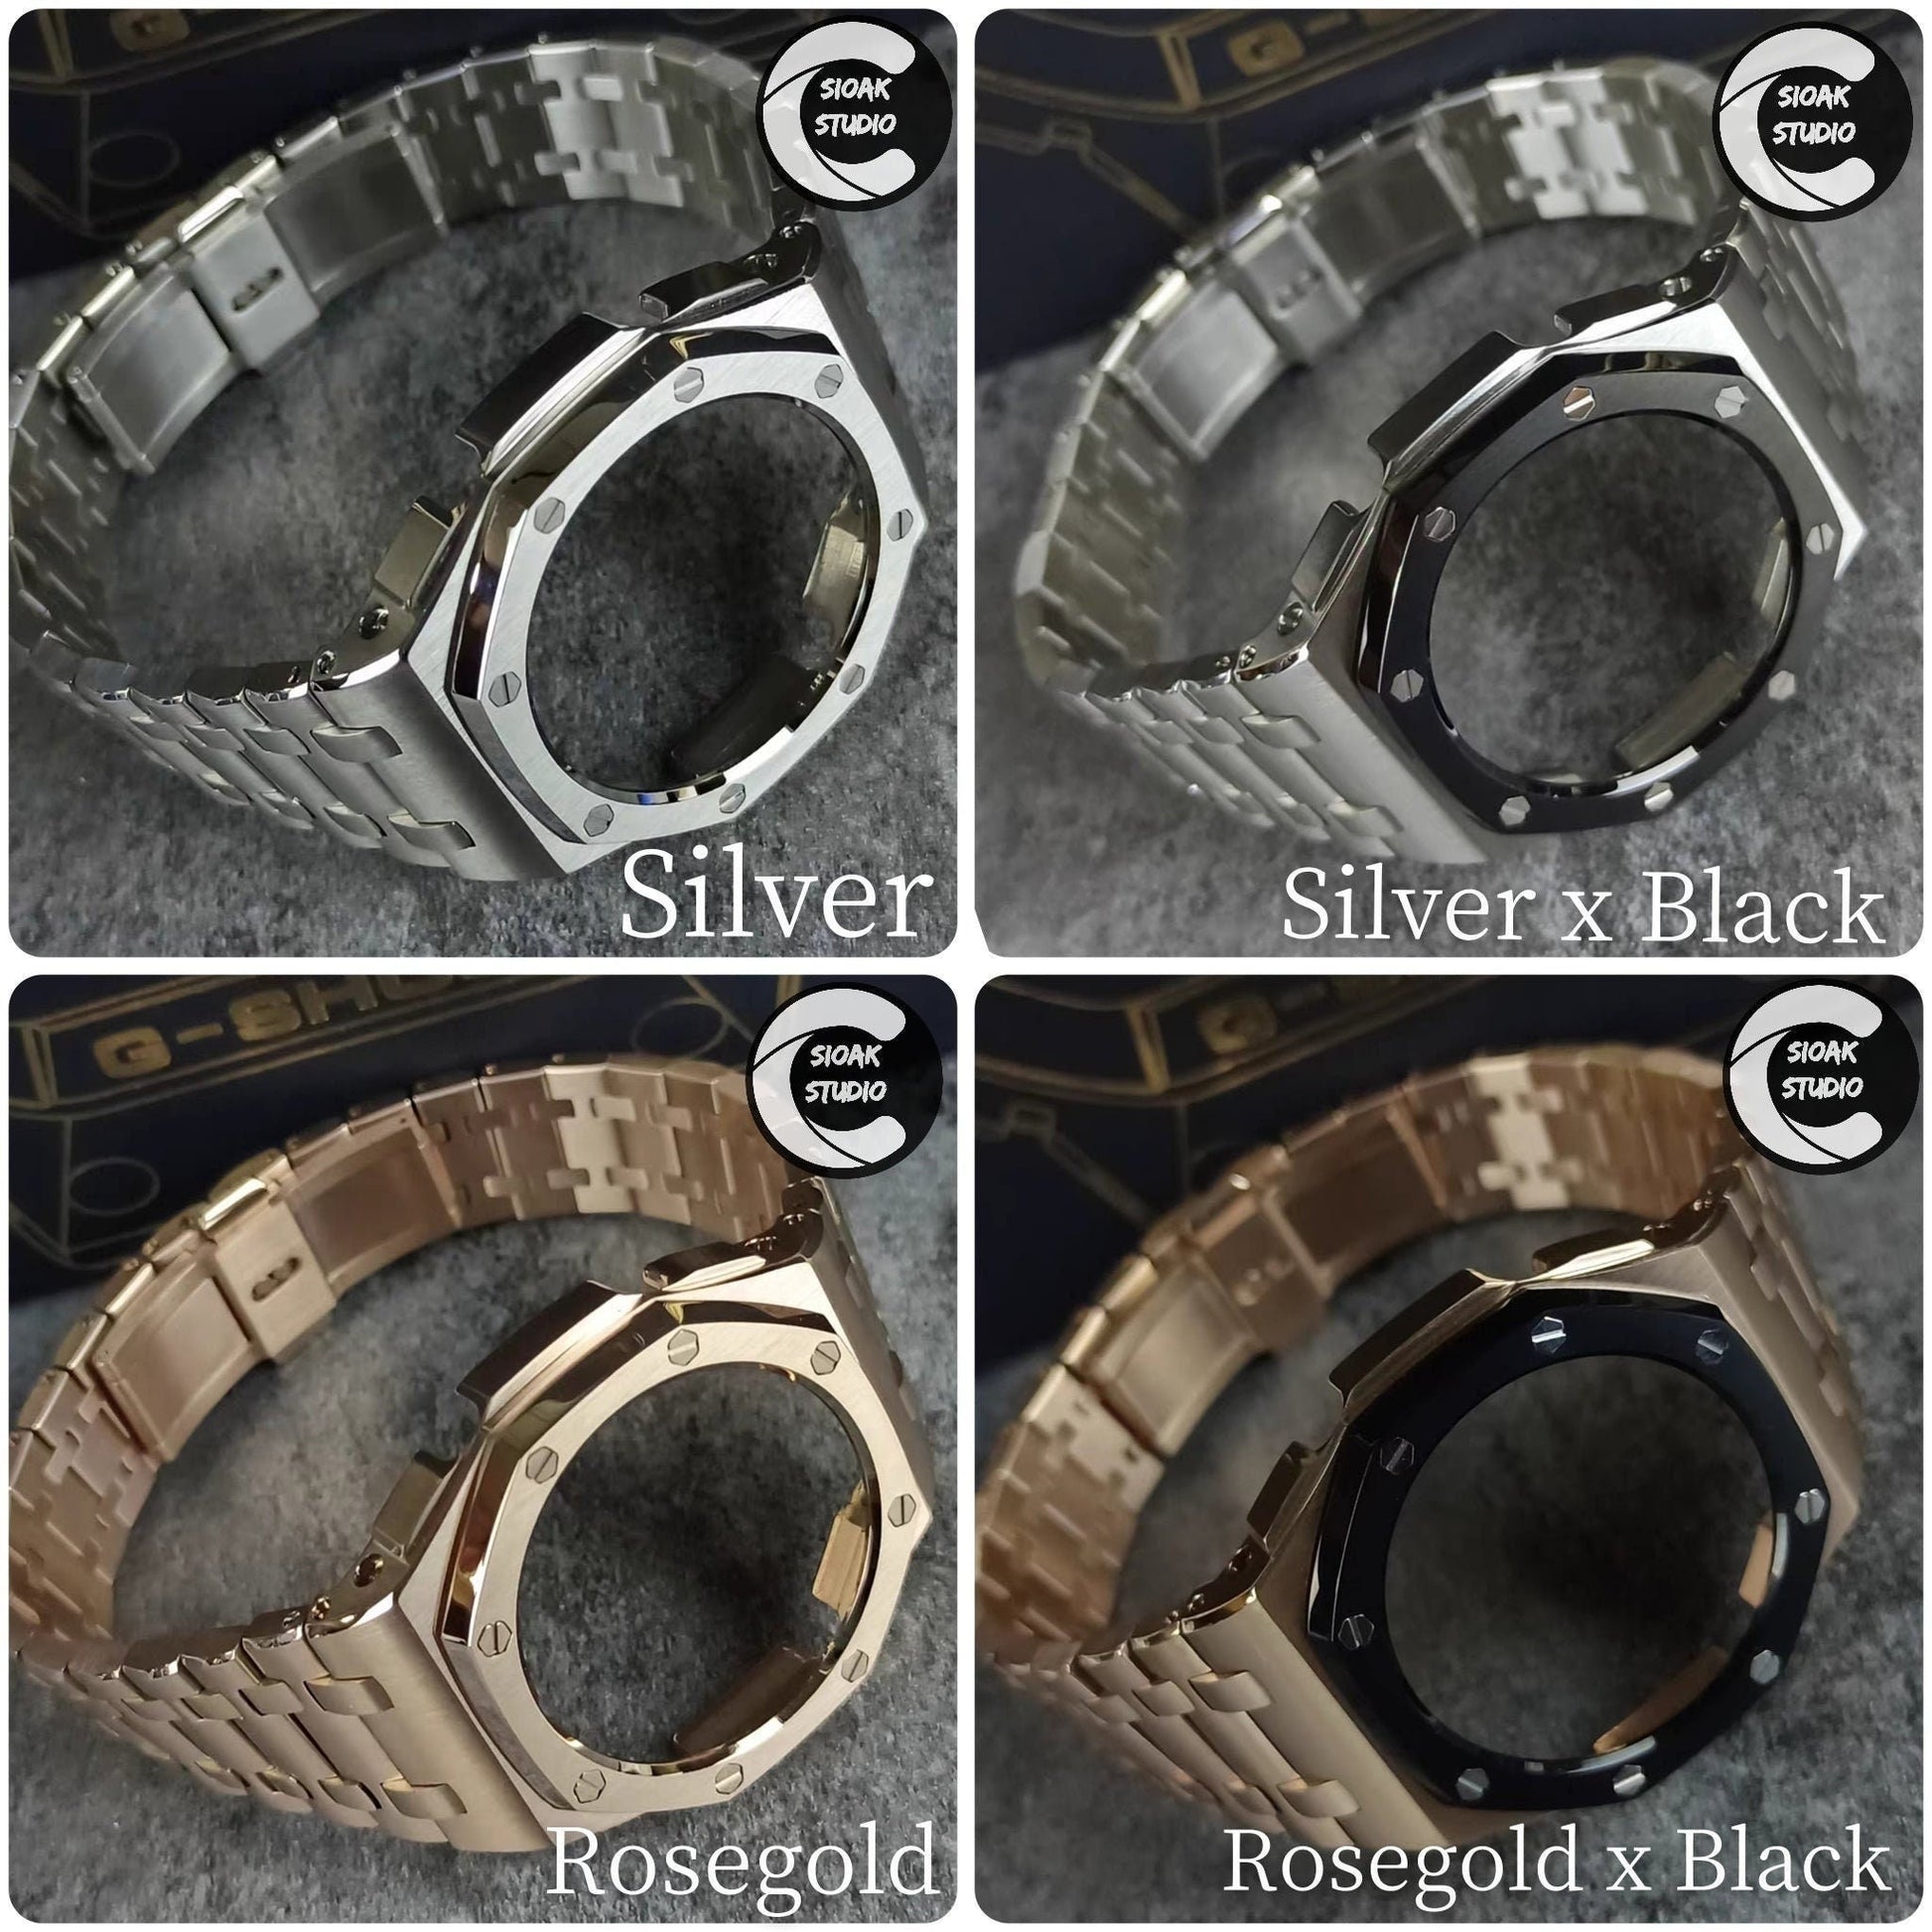 Casioak Mod Watch Offshore Superior Silver Case Metal Strap Black Gray Time Mark Gray Dial 44mm - Casioak Studio